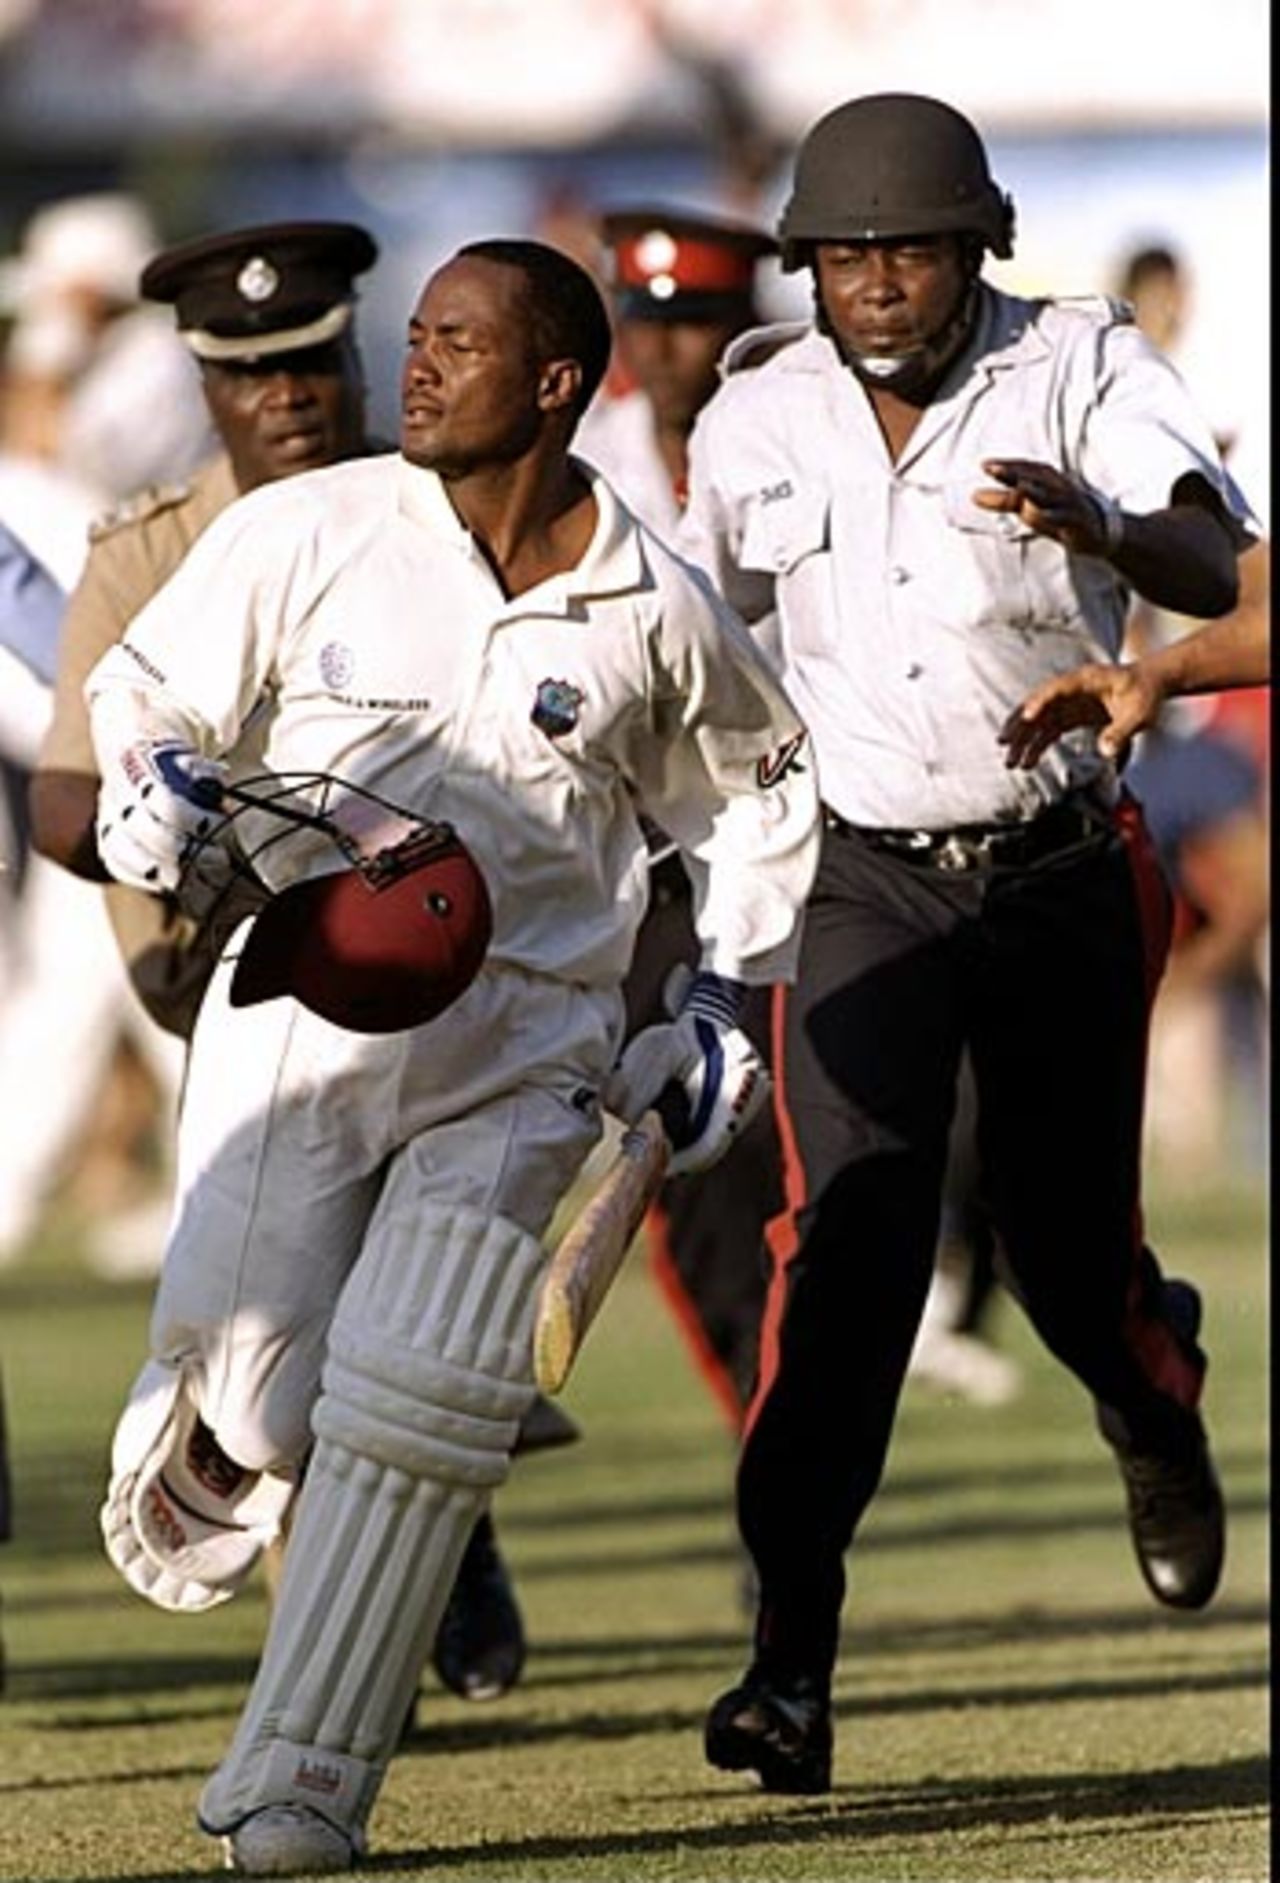 Brian Lara runs off the pitch after scoring 213 against Australia, West Indies v Australia, Jamaica, 14 March, 1999